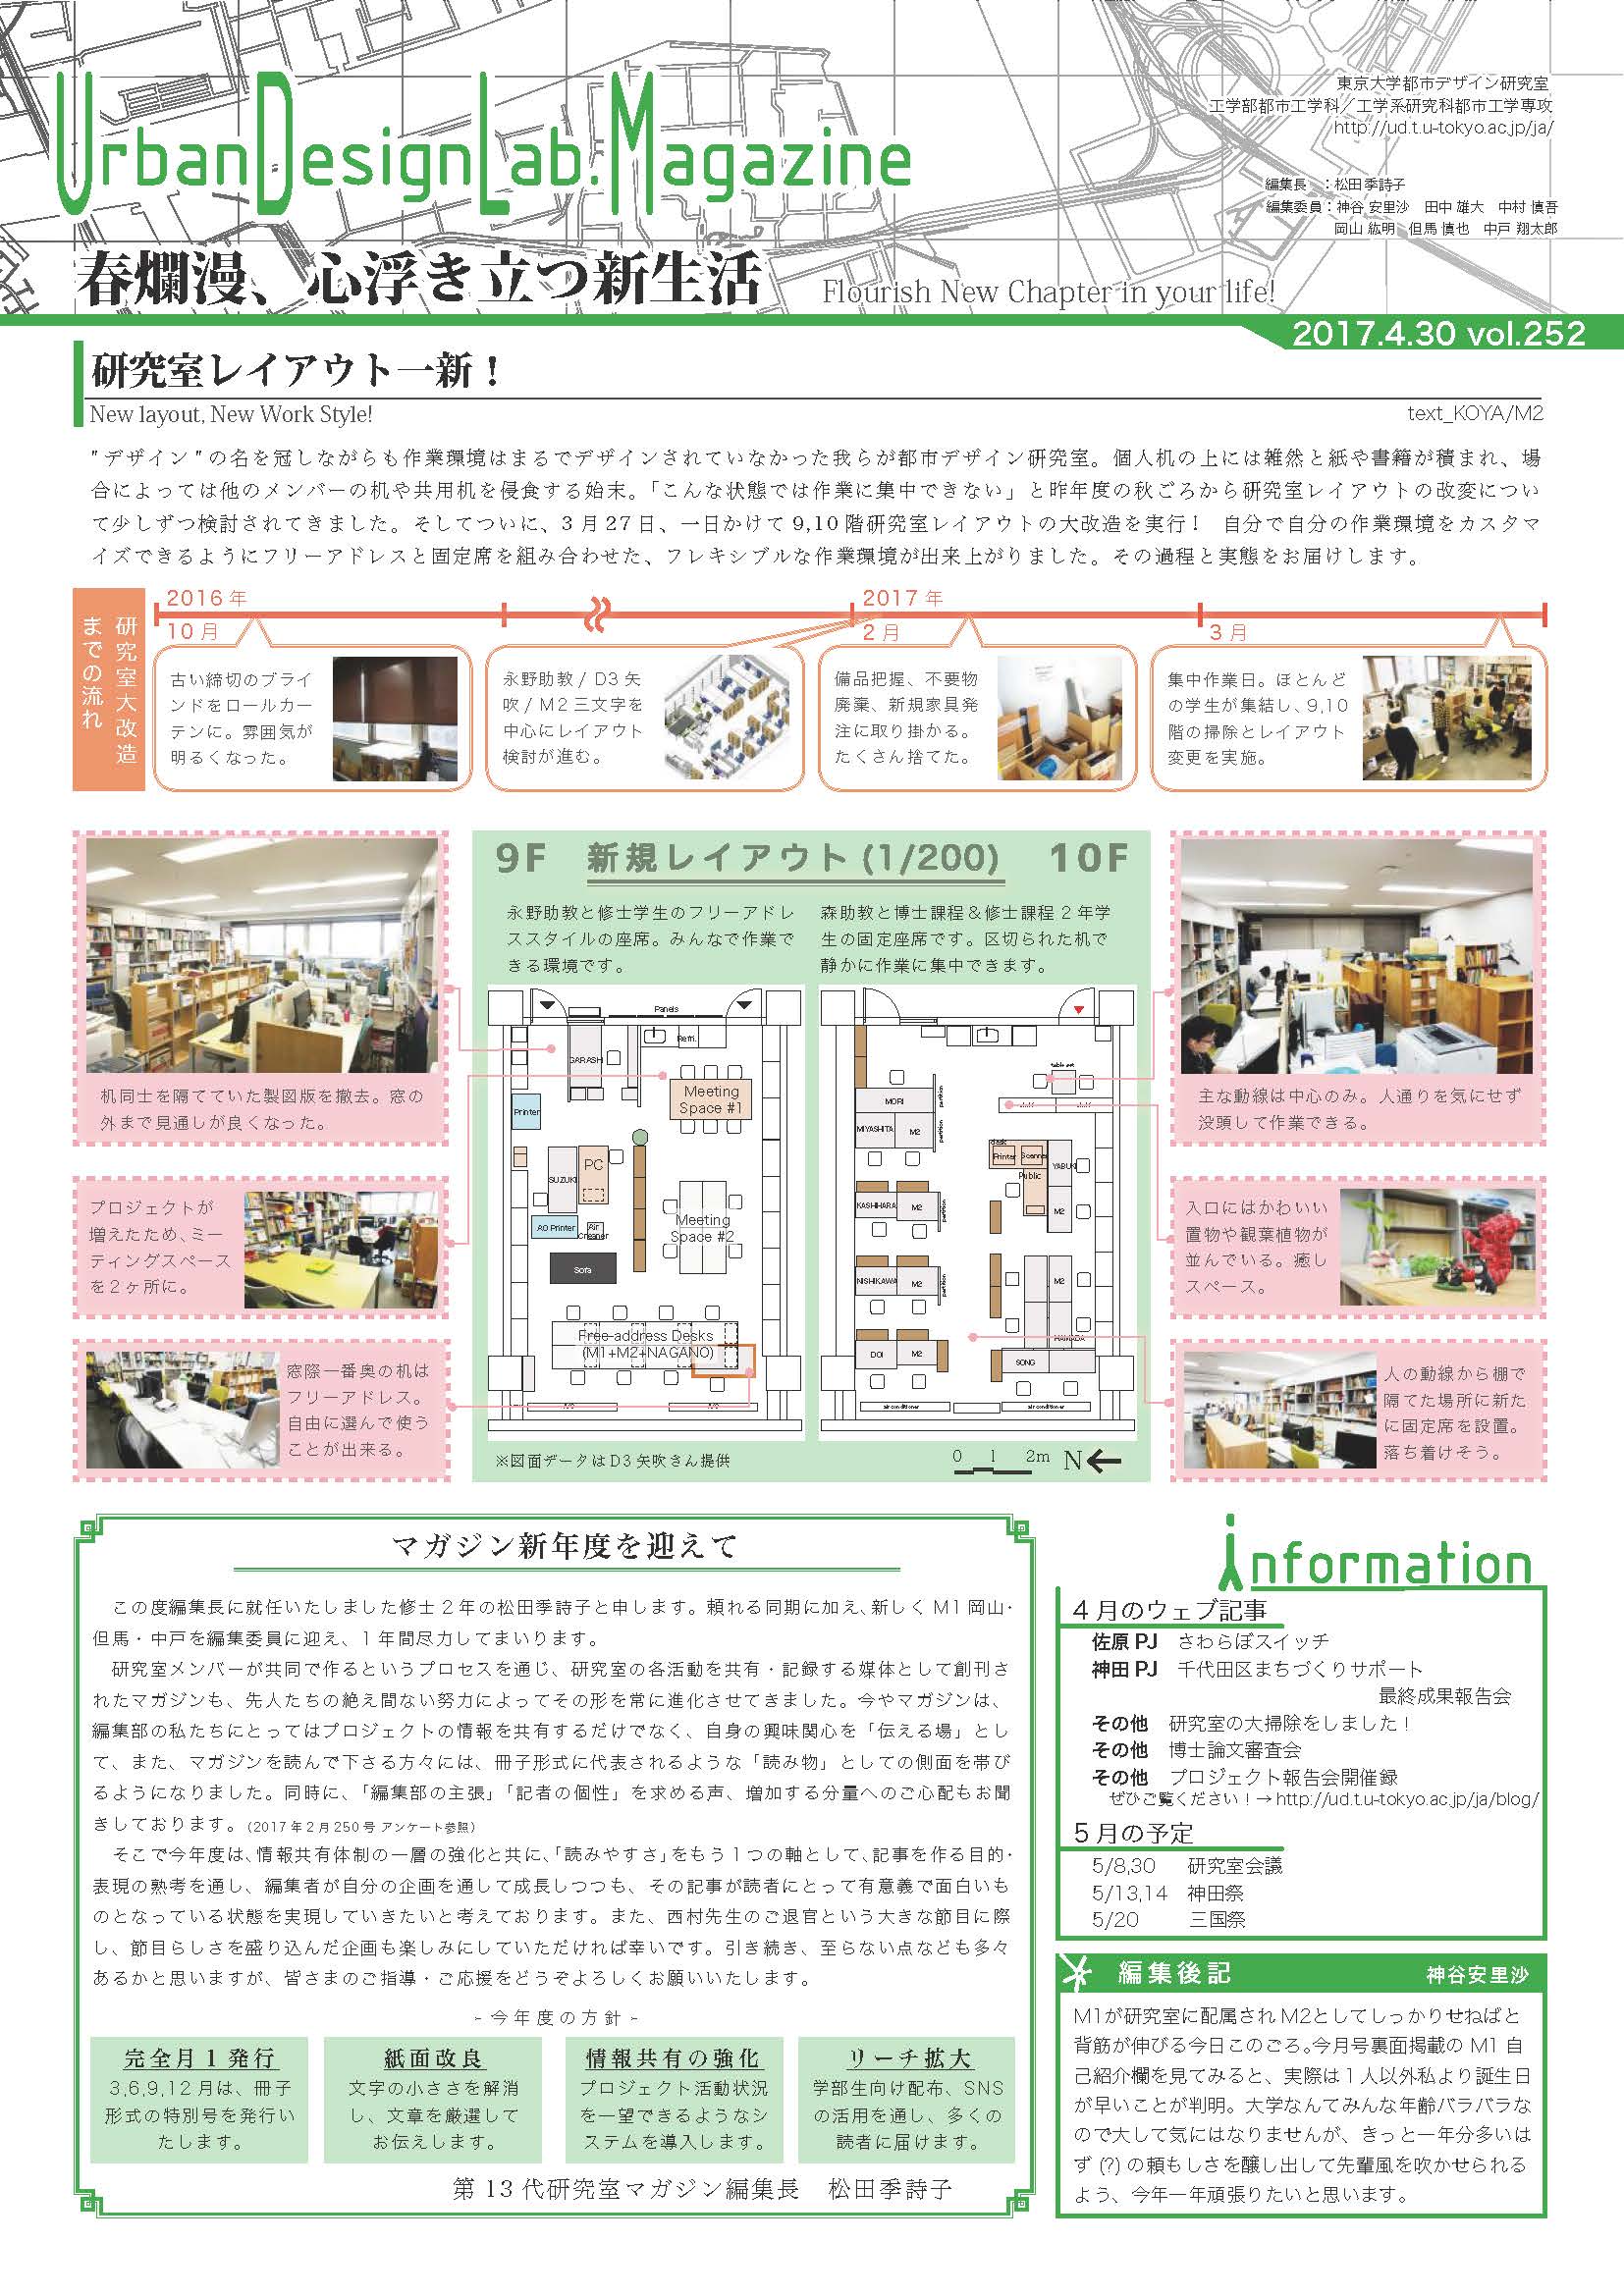 http://ud.t.u-tokyo.ac.jp/news/_images/vol.252%20_%E3%83%9A%E3%83%BC%E3%82%B8_1.jpg